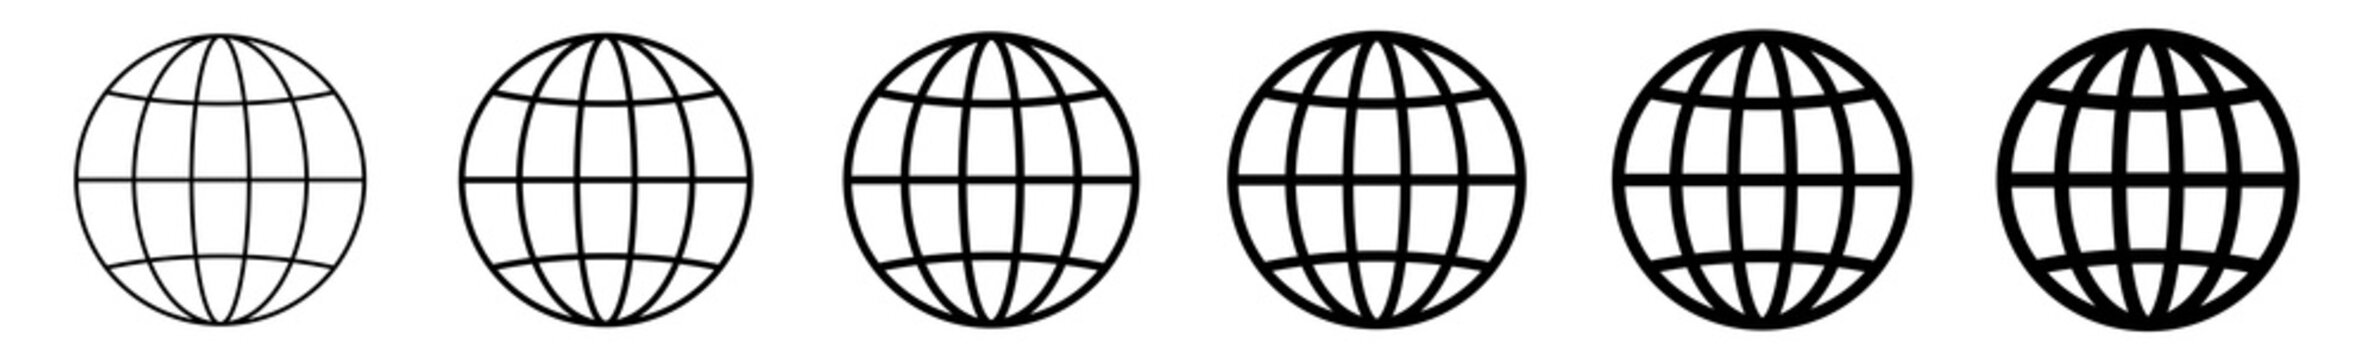 World Icon Black | Earth Illustration | Globe Symbol | Planet Logo | World Wide Web Sign | Isolated | Variations